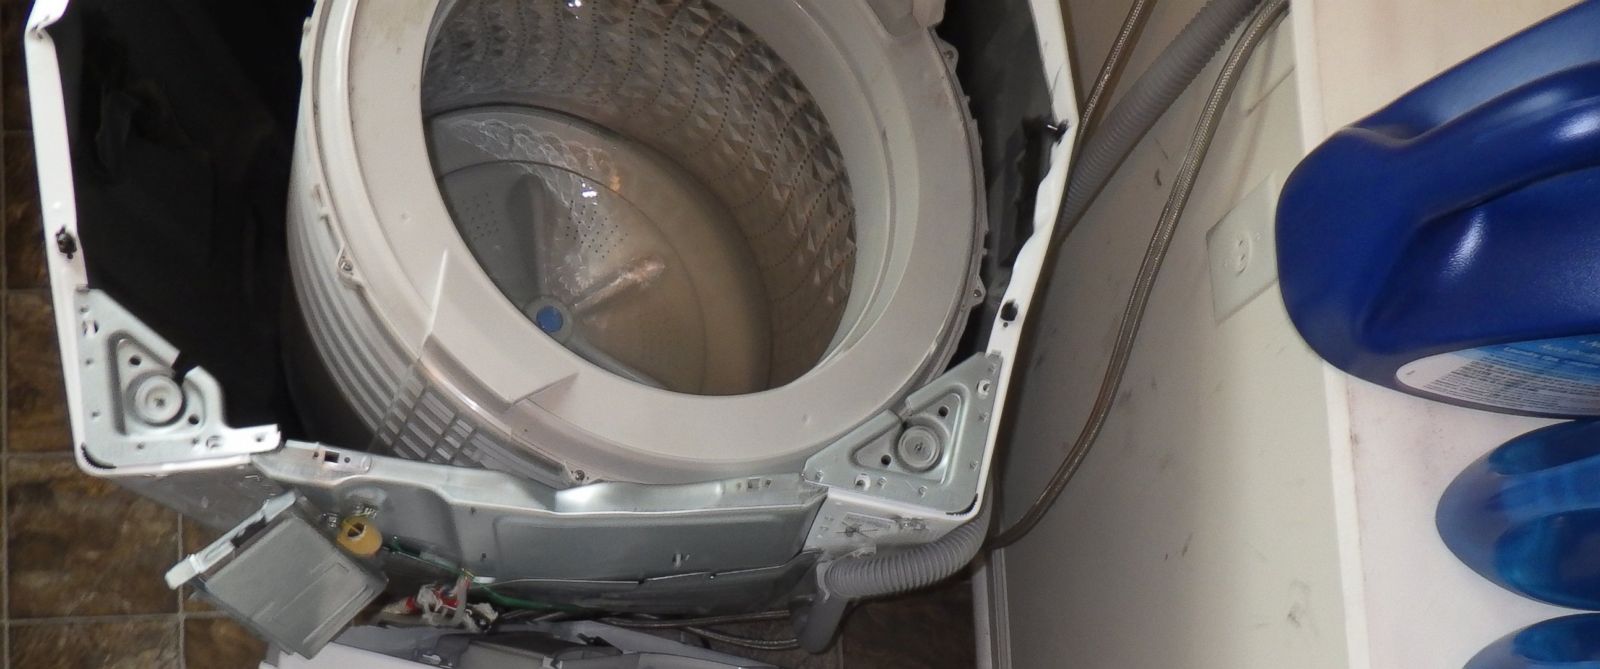 Sau Note 7 đến máy giặt Samsung phát nổ